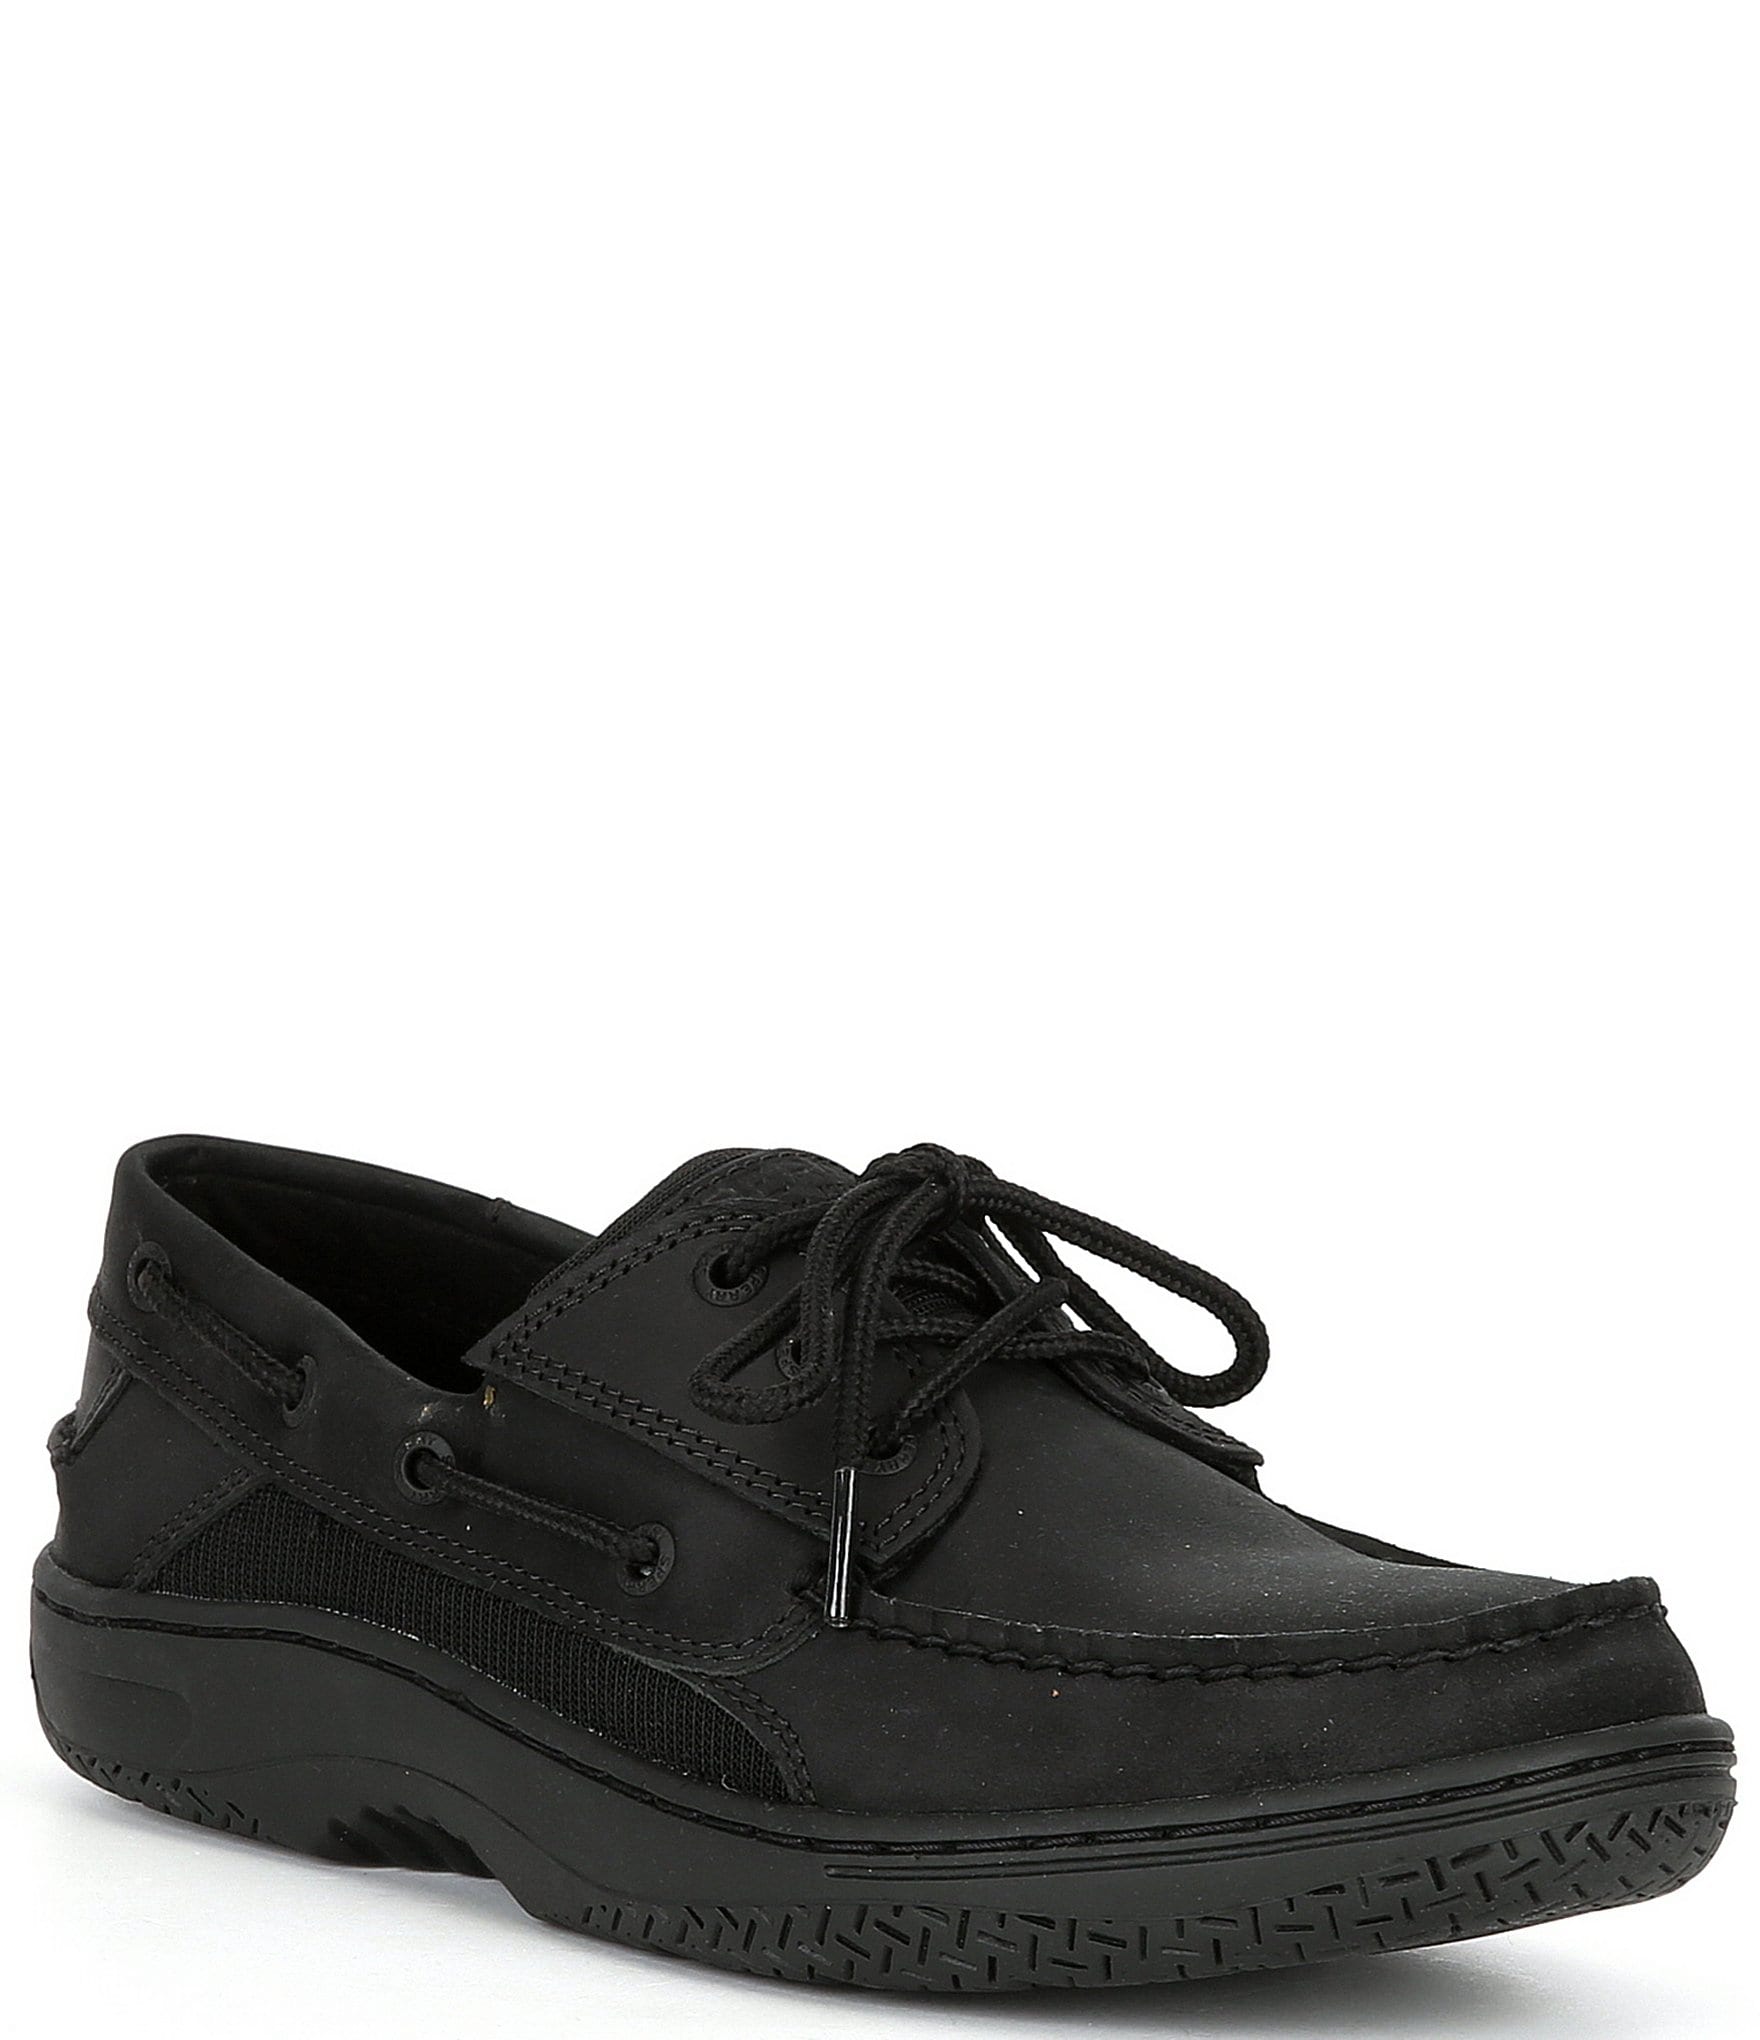 Semi-Formal Attire with Black Boat Shoes